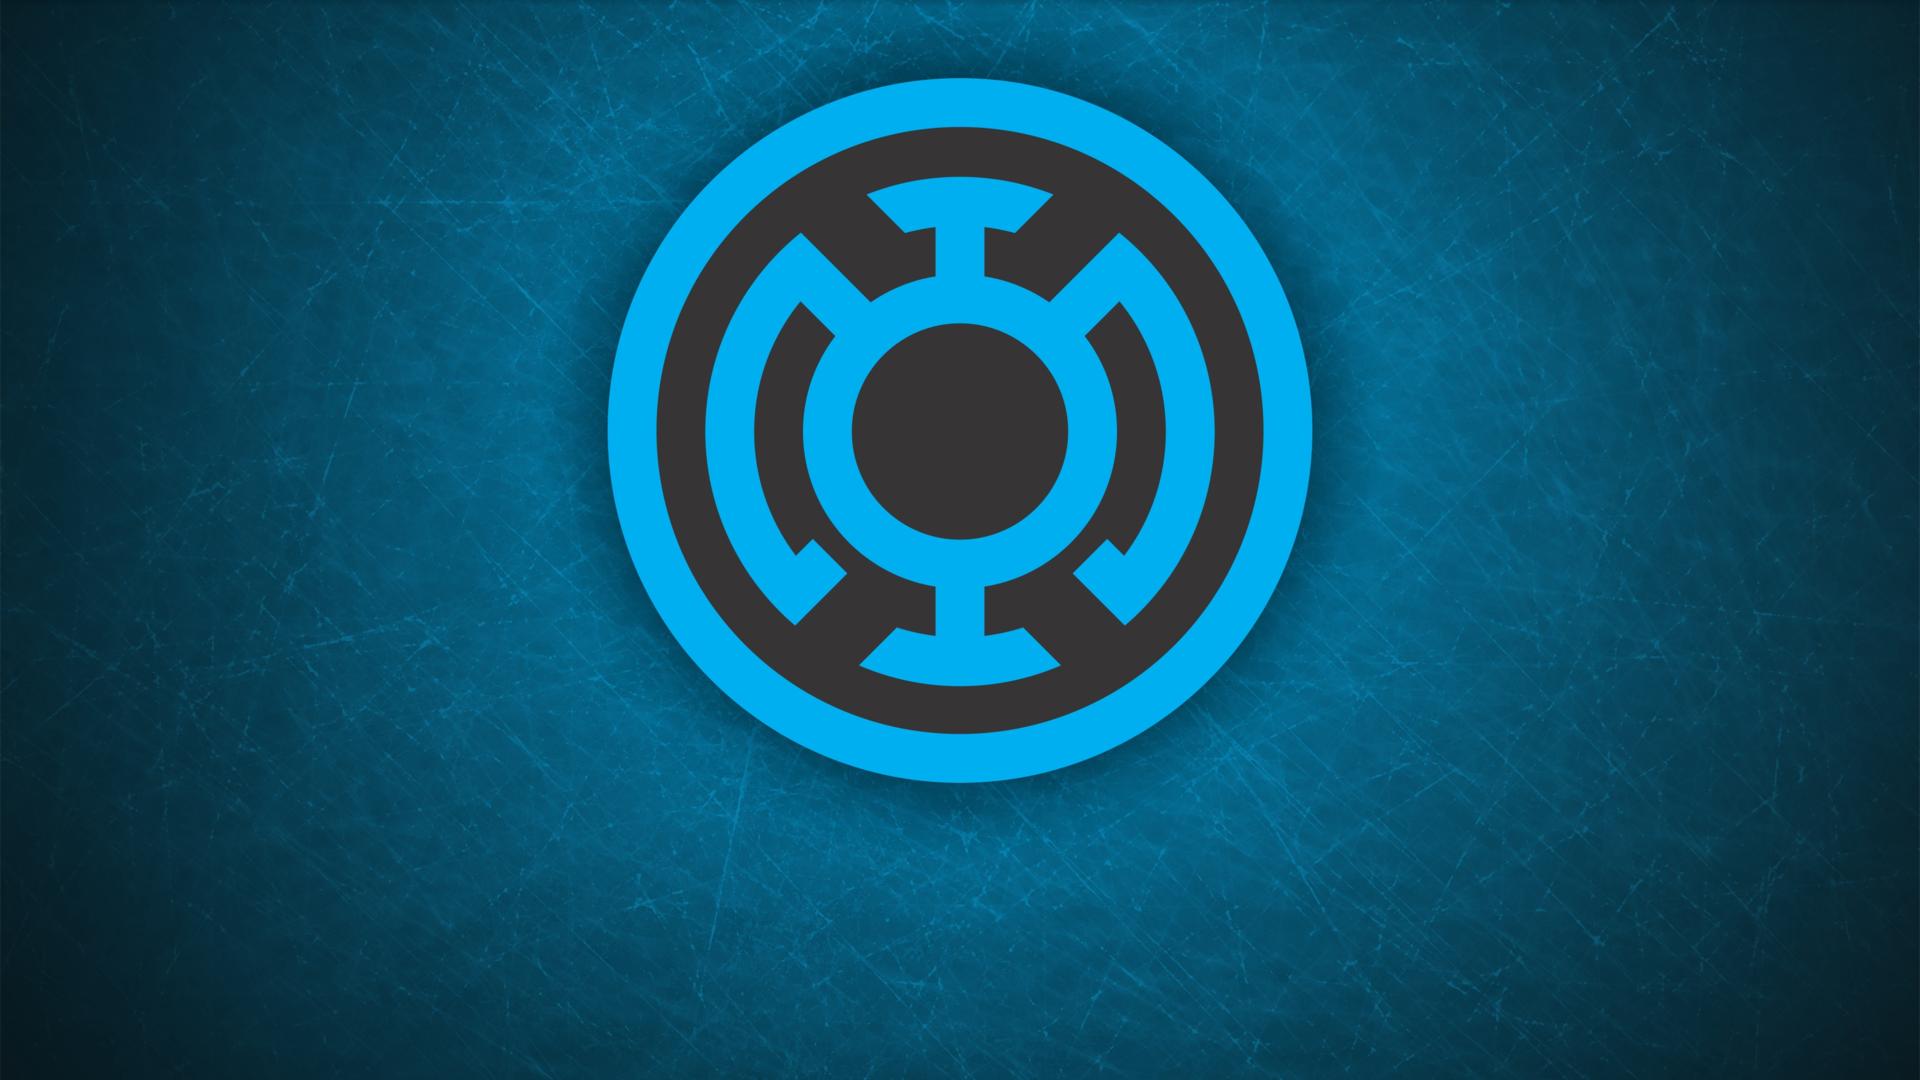 Blue Lantern Corps Wallpaper. Blue Lantern Corps Background